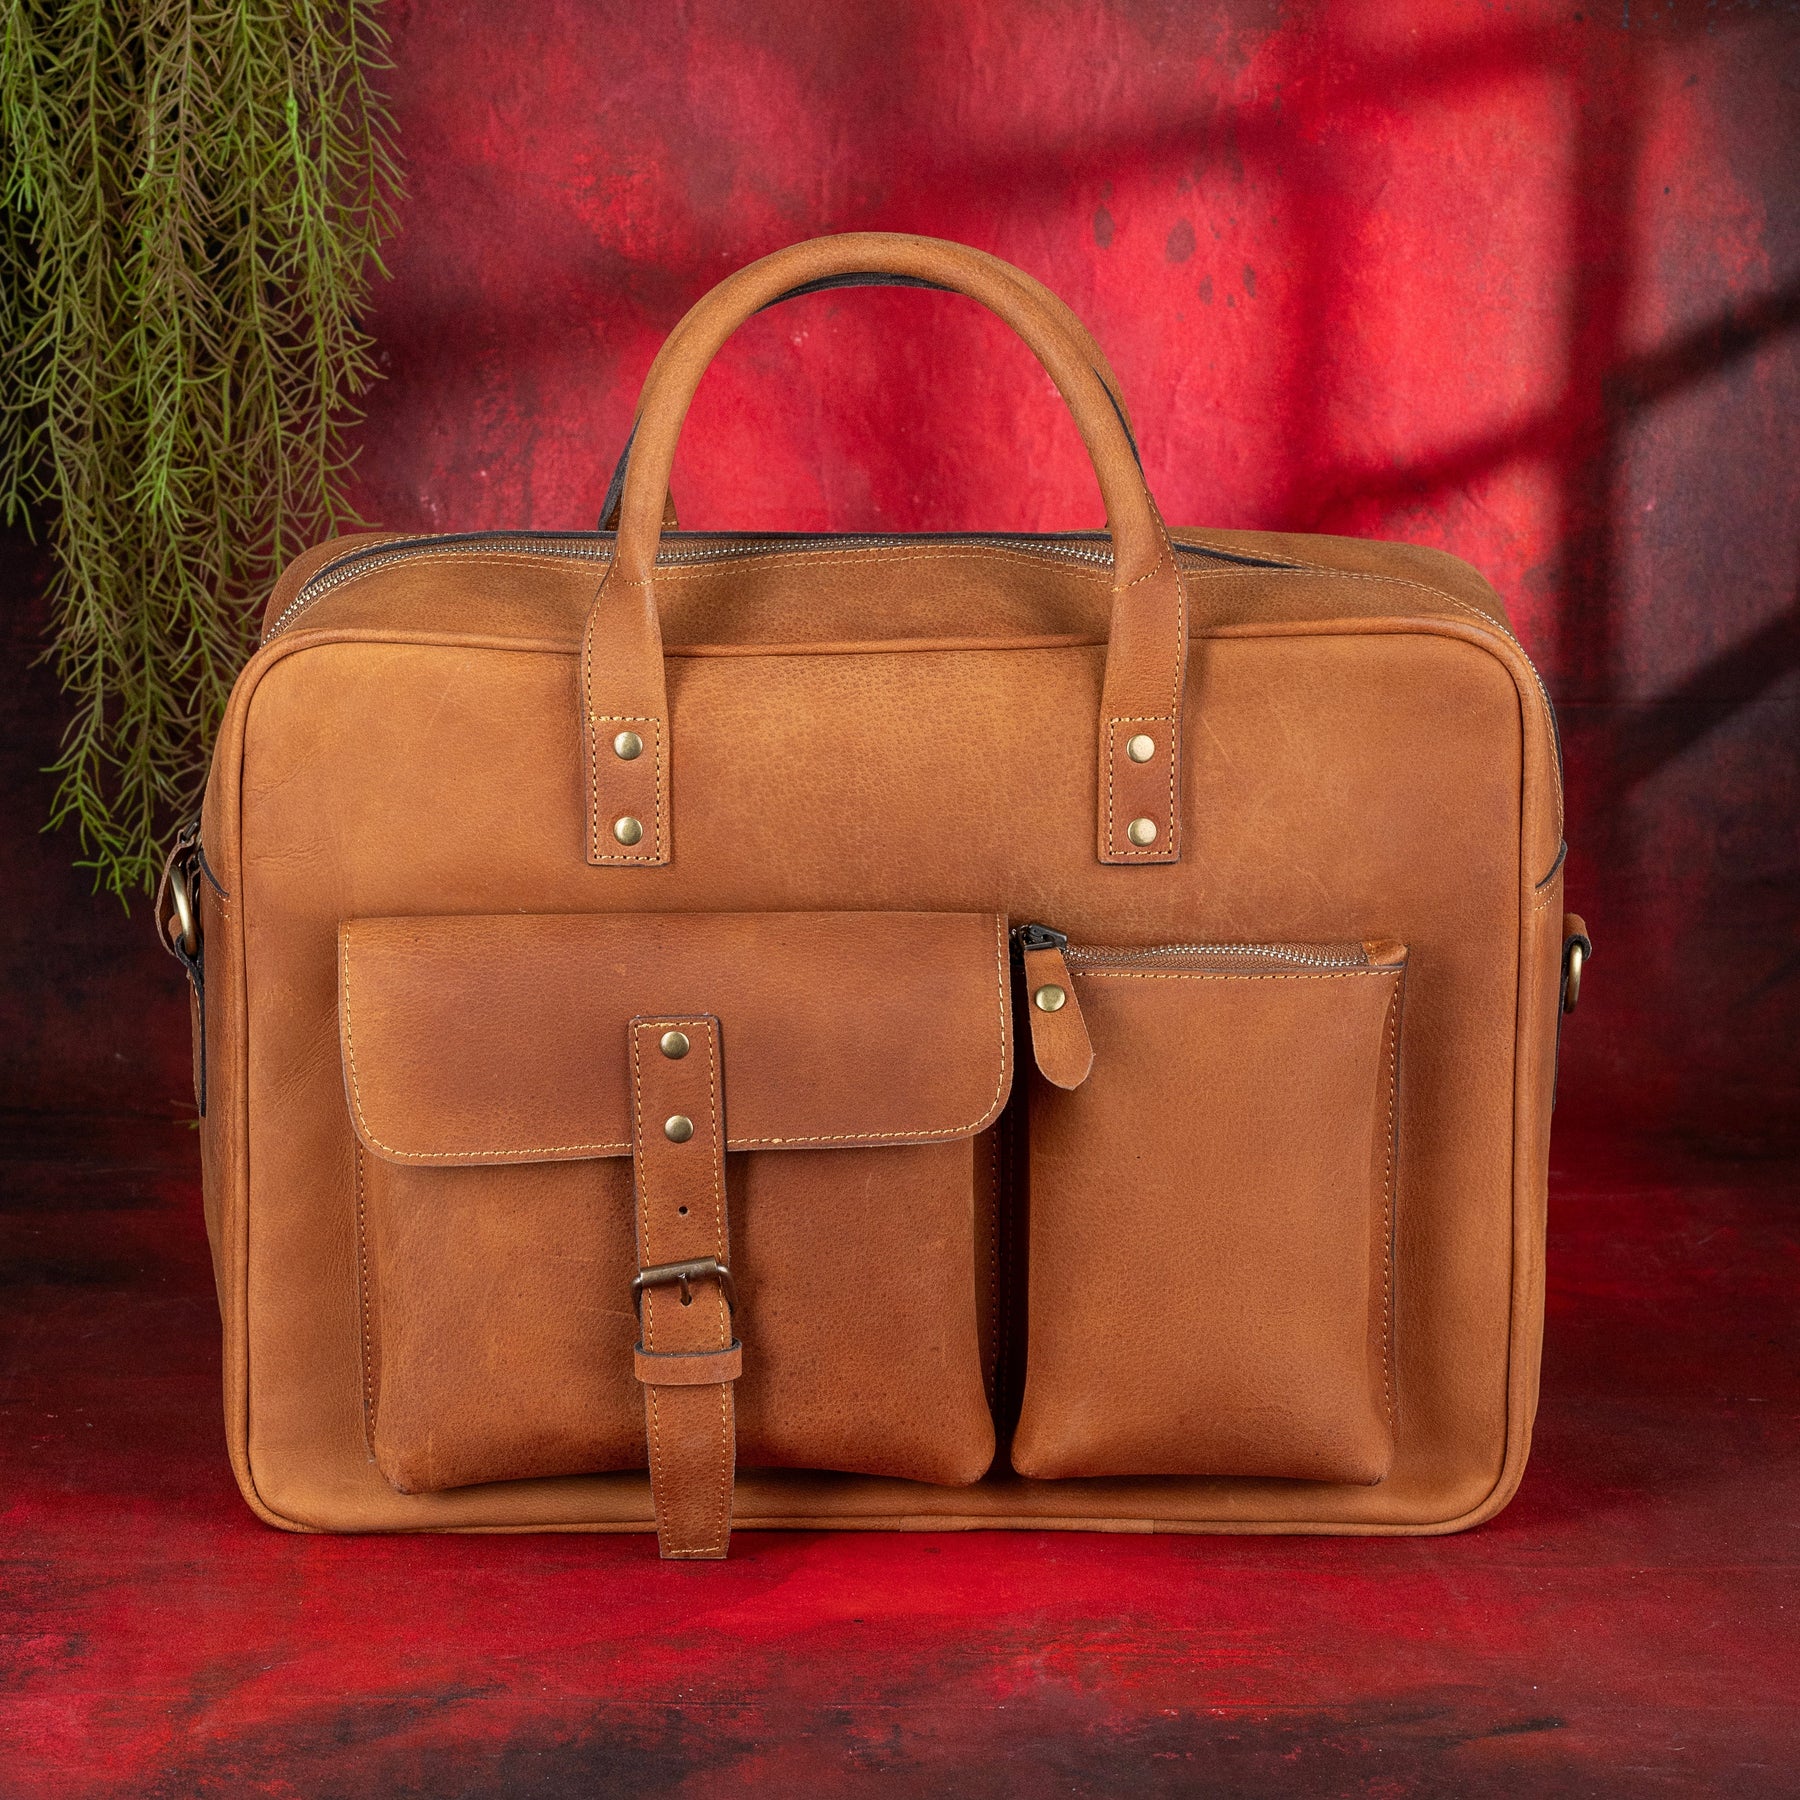 33rd Degree Scottish Rite Briefcase - Brown Leather - Bricks Masons